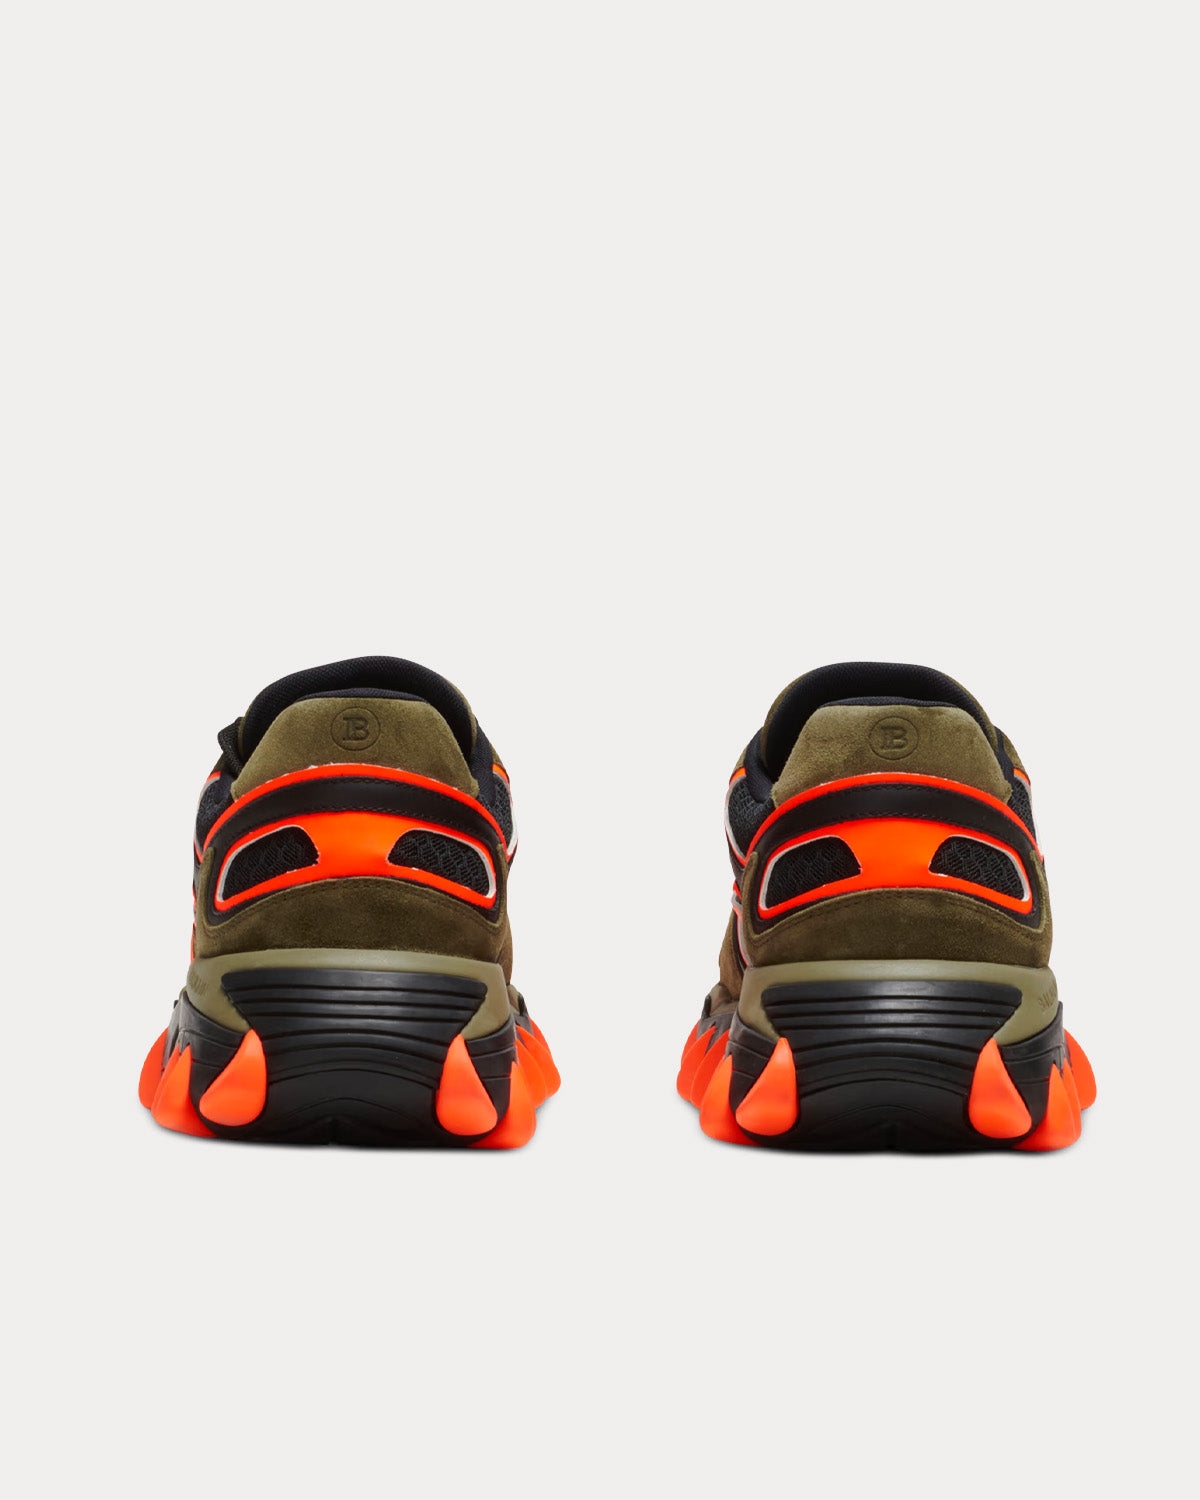 Balmain - B-East Leather, Suede & Mesh Khaki / Orange Low Top Sneakers